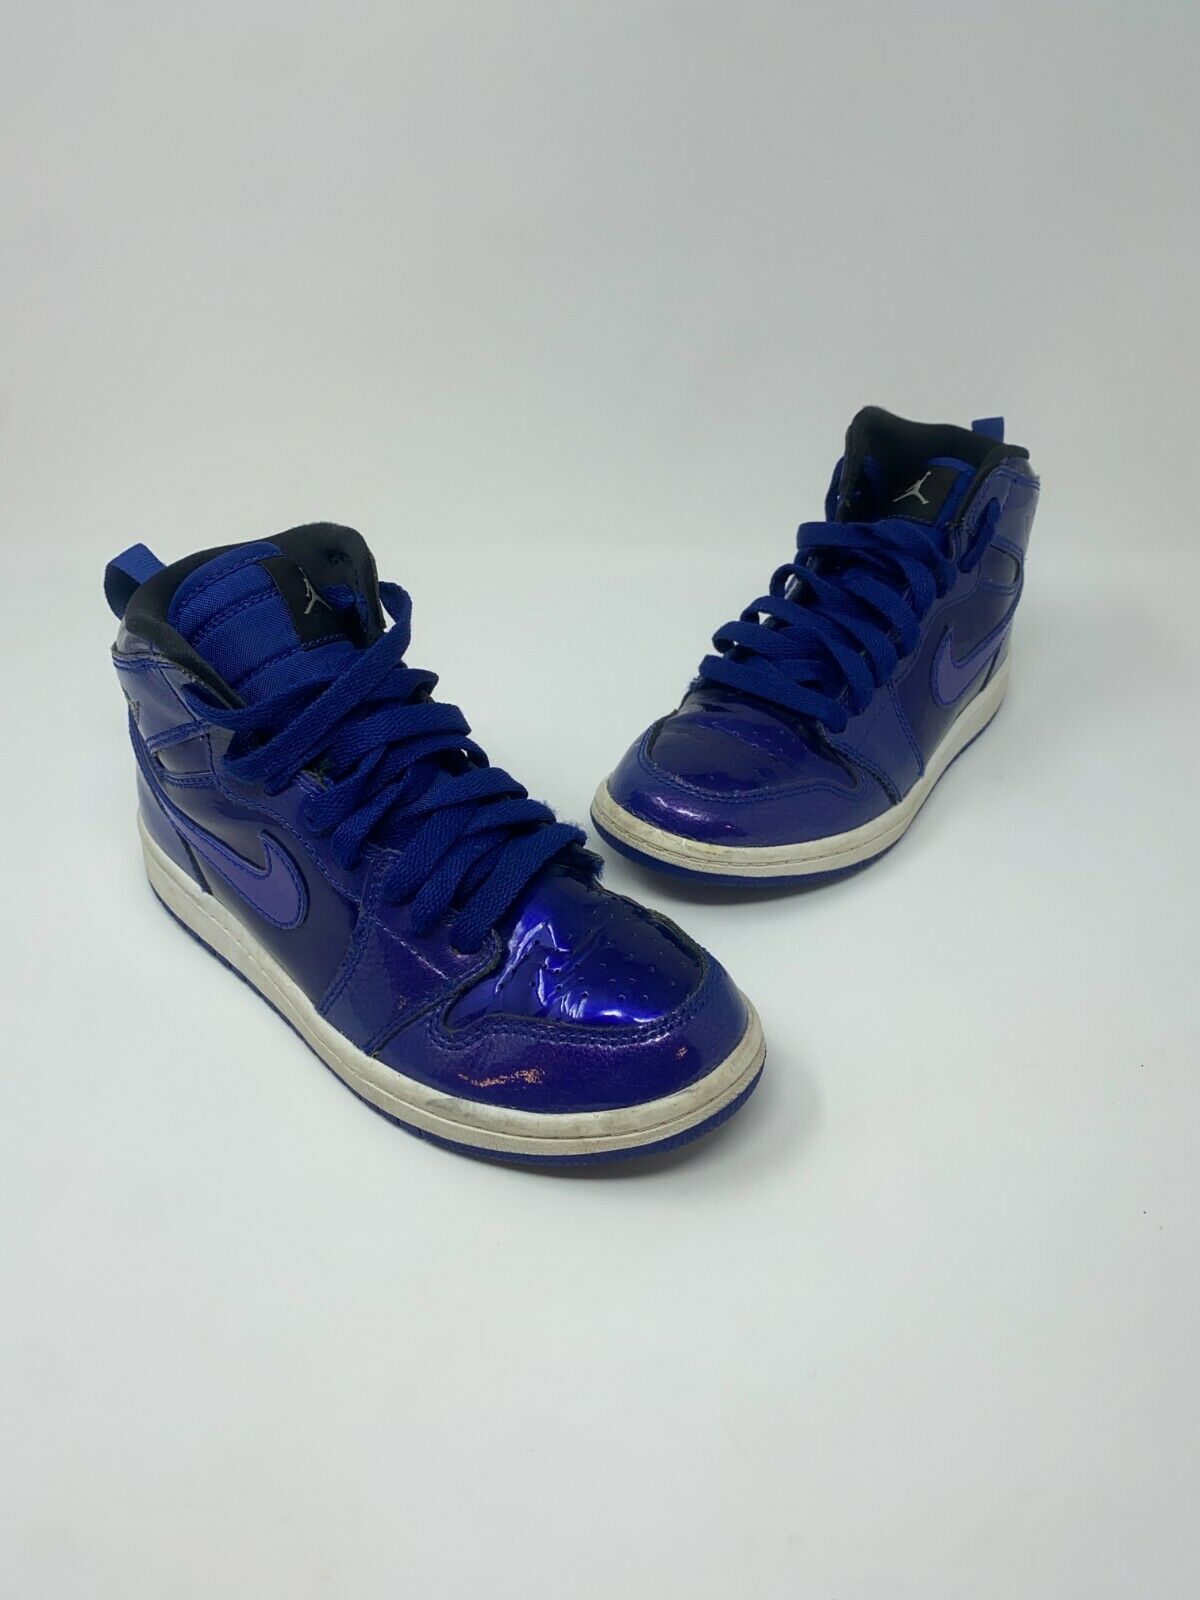 Nike Air Jordan Kids 1 Retro High BP 705303-420 Royal Blue Basketball Shoes Sz 1